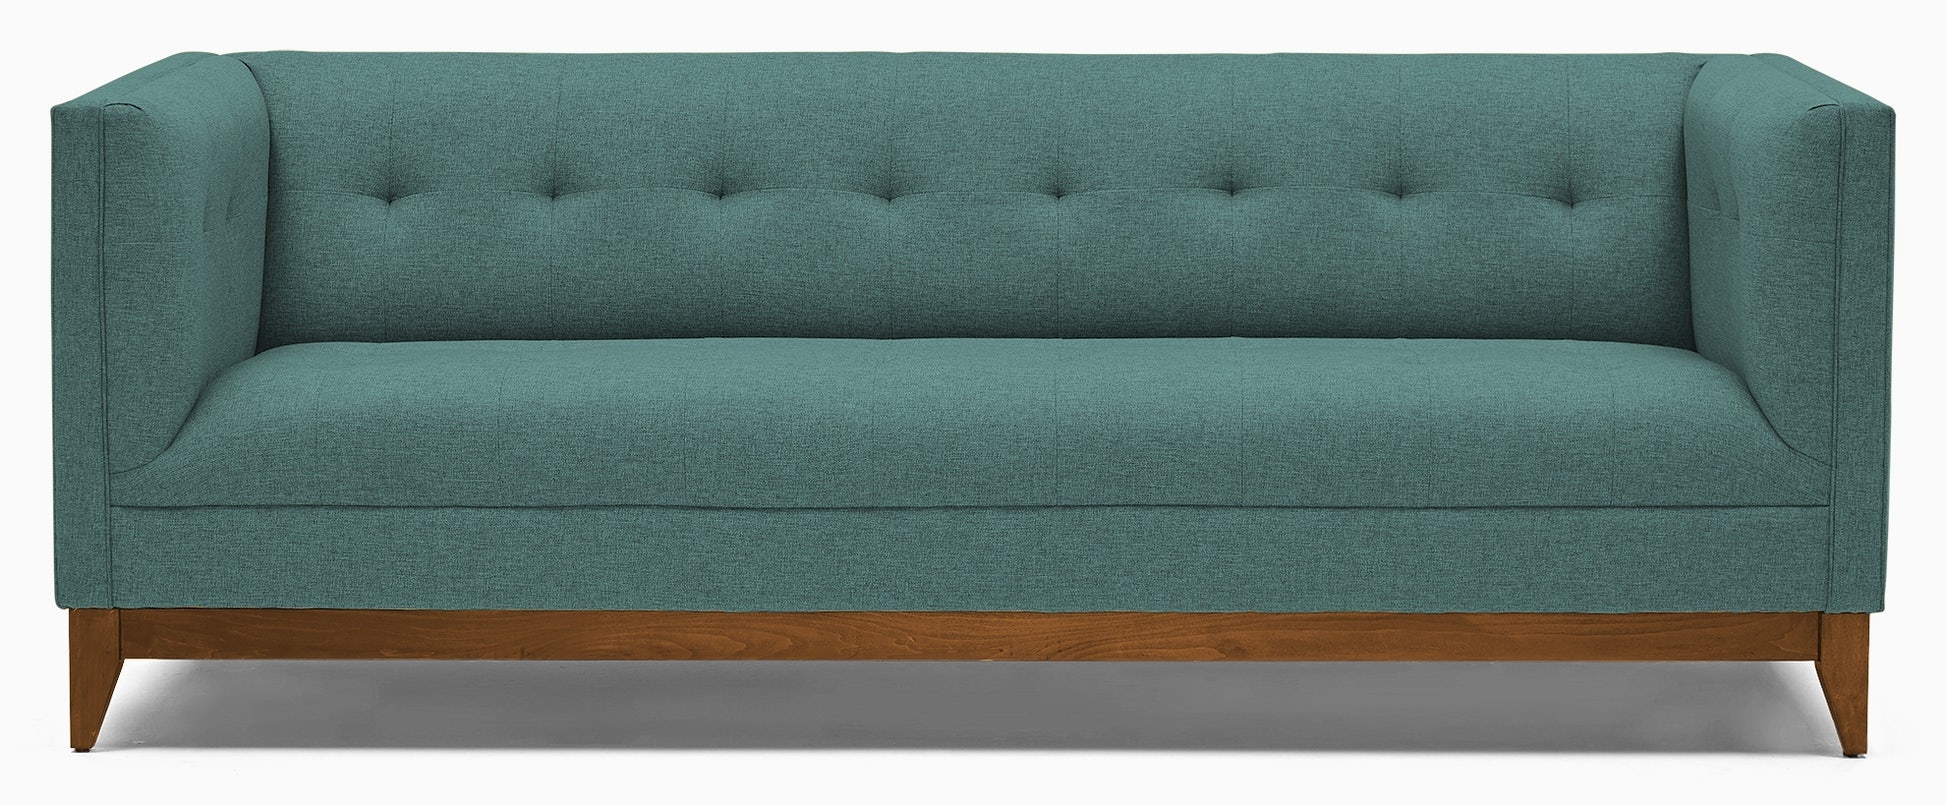 Stowe Sofa - Image 0